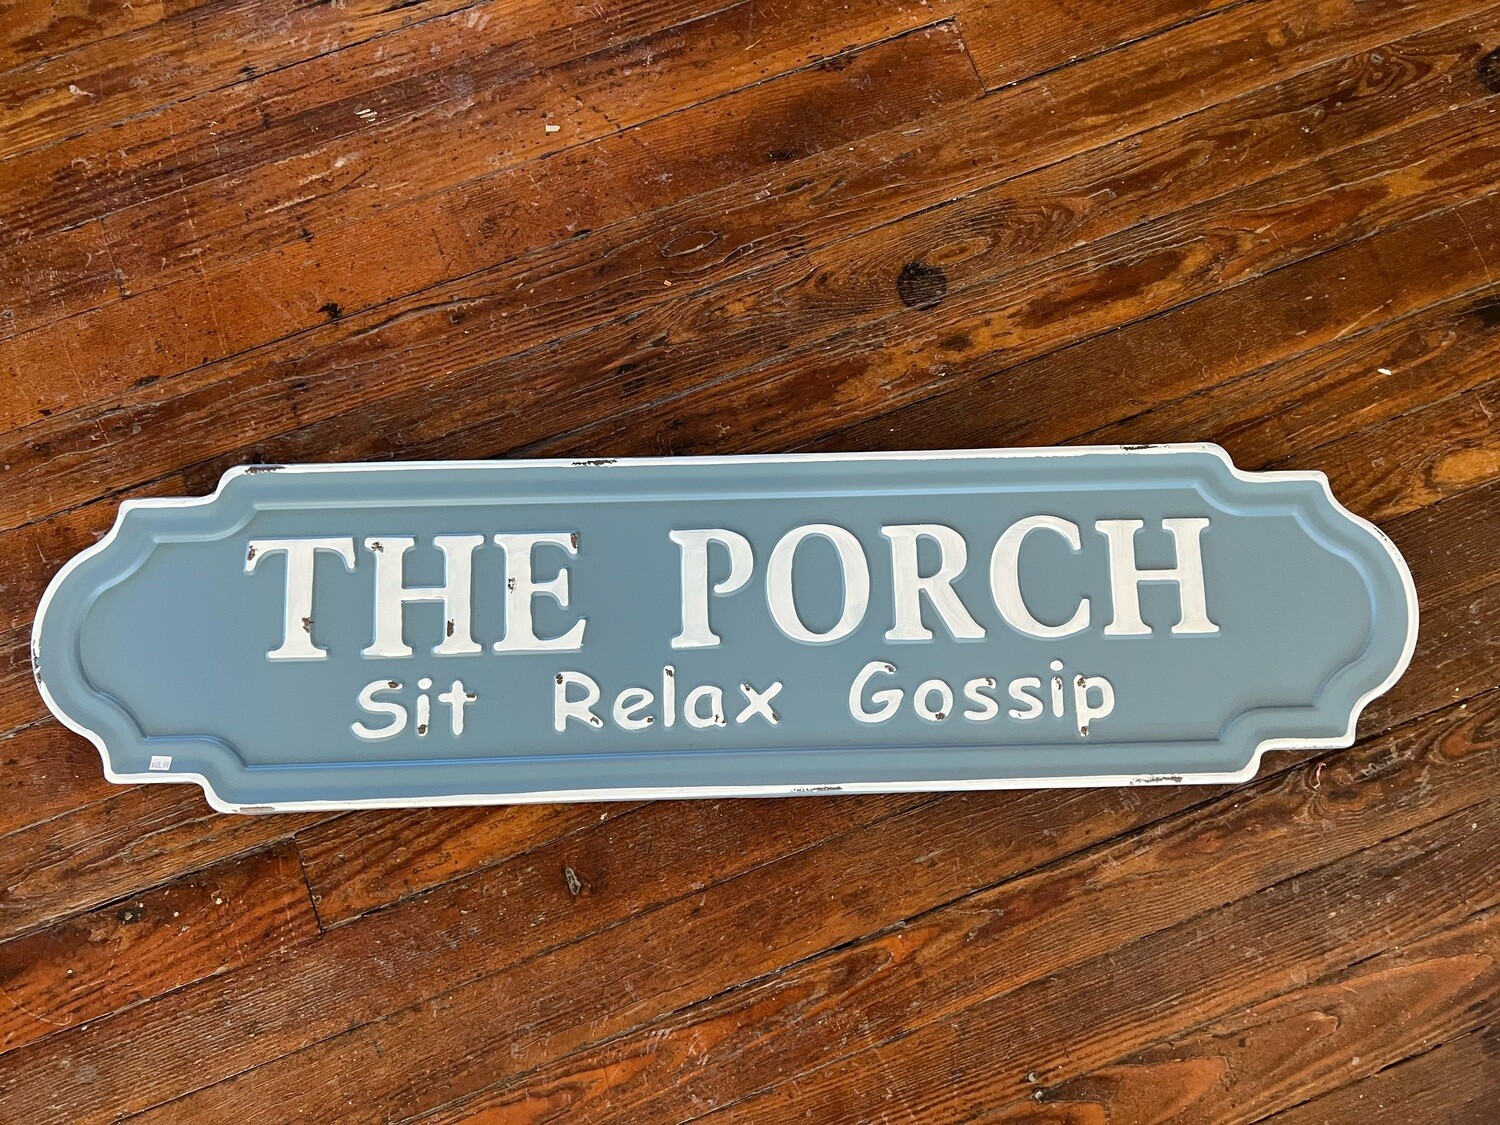 The Porch (gossip)